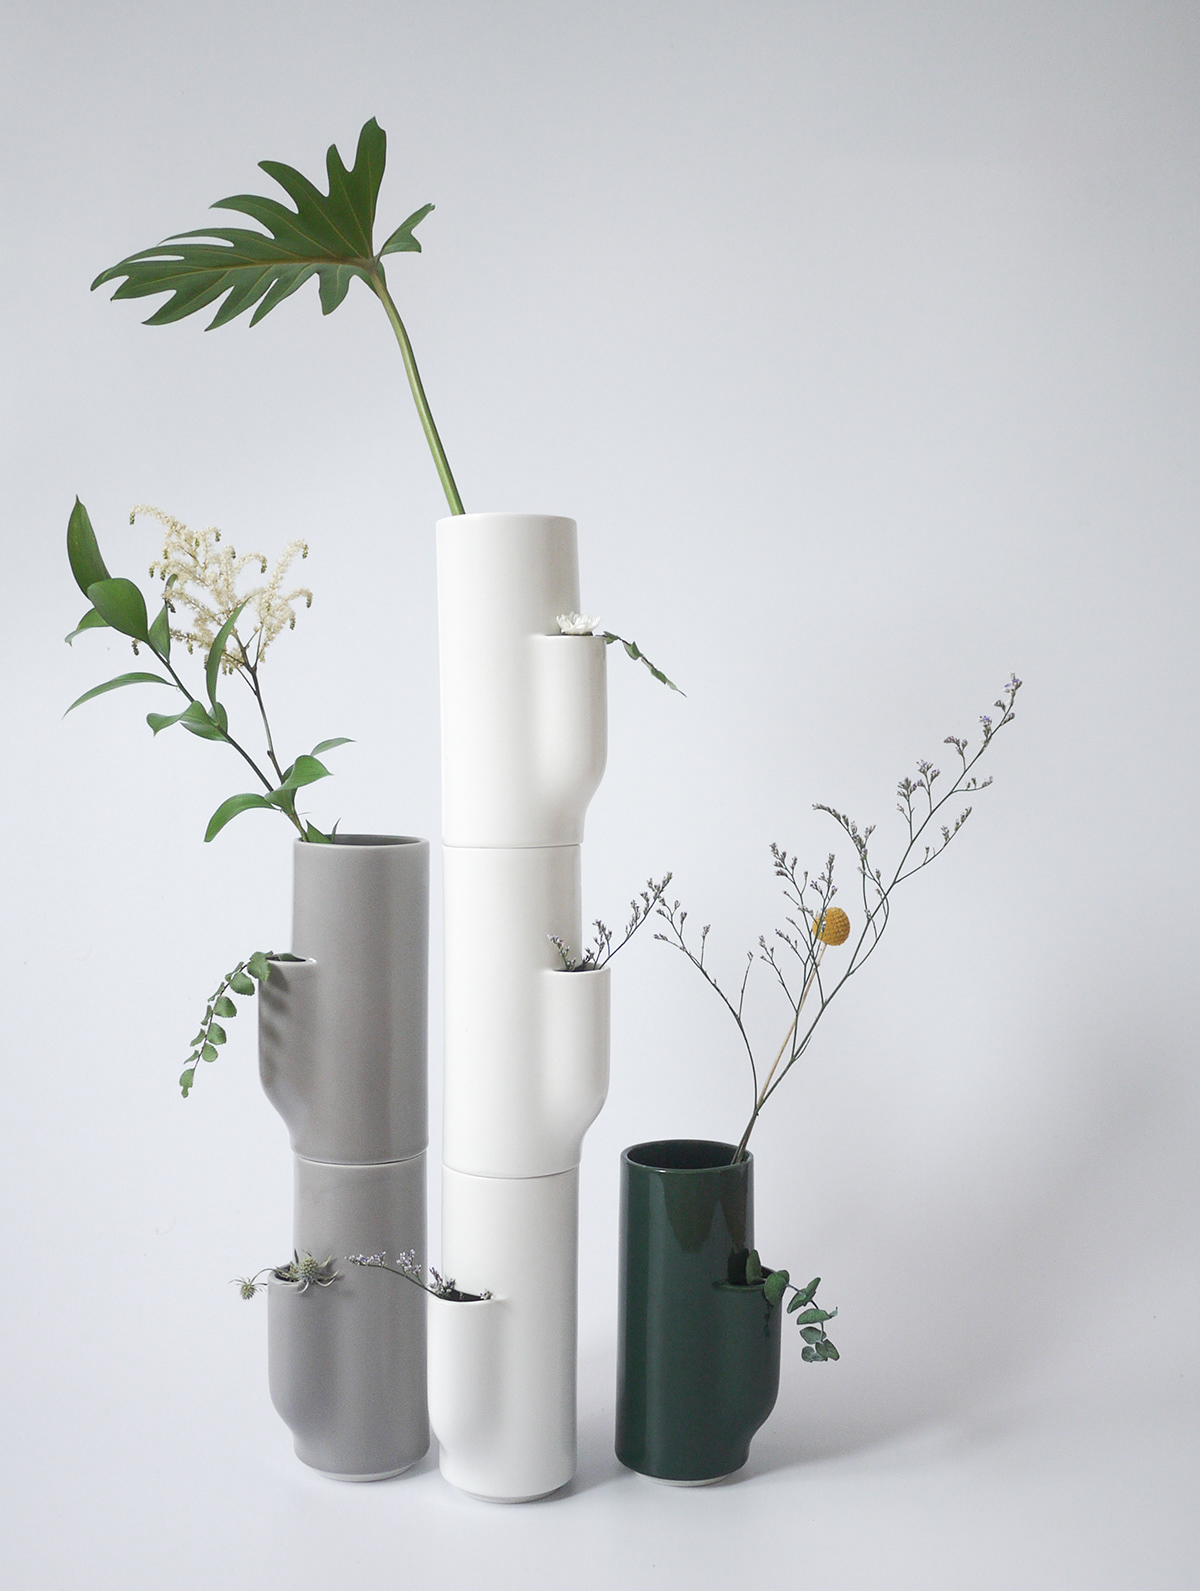 ceramics  Vase industrial design  hyejinlee